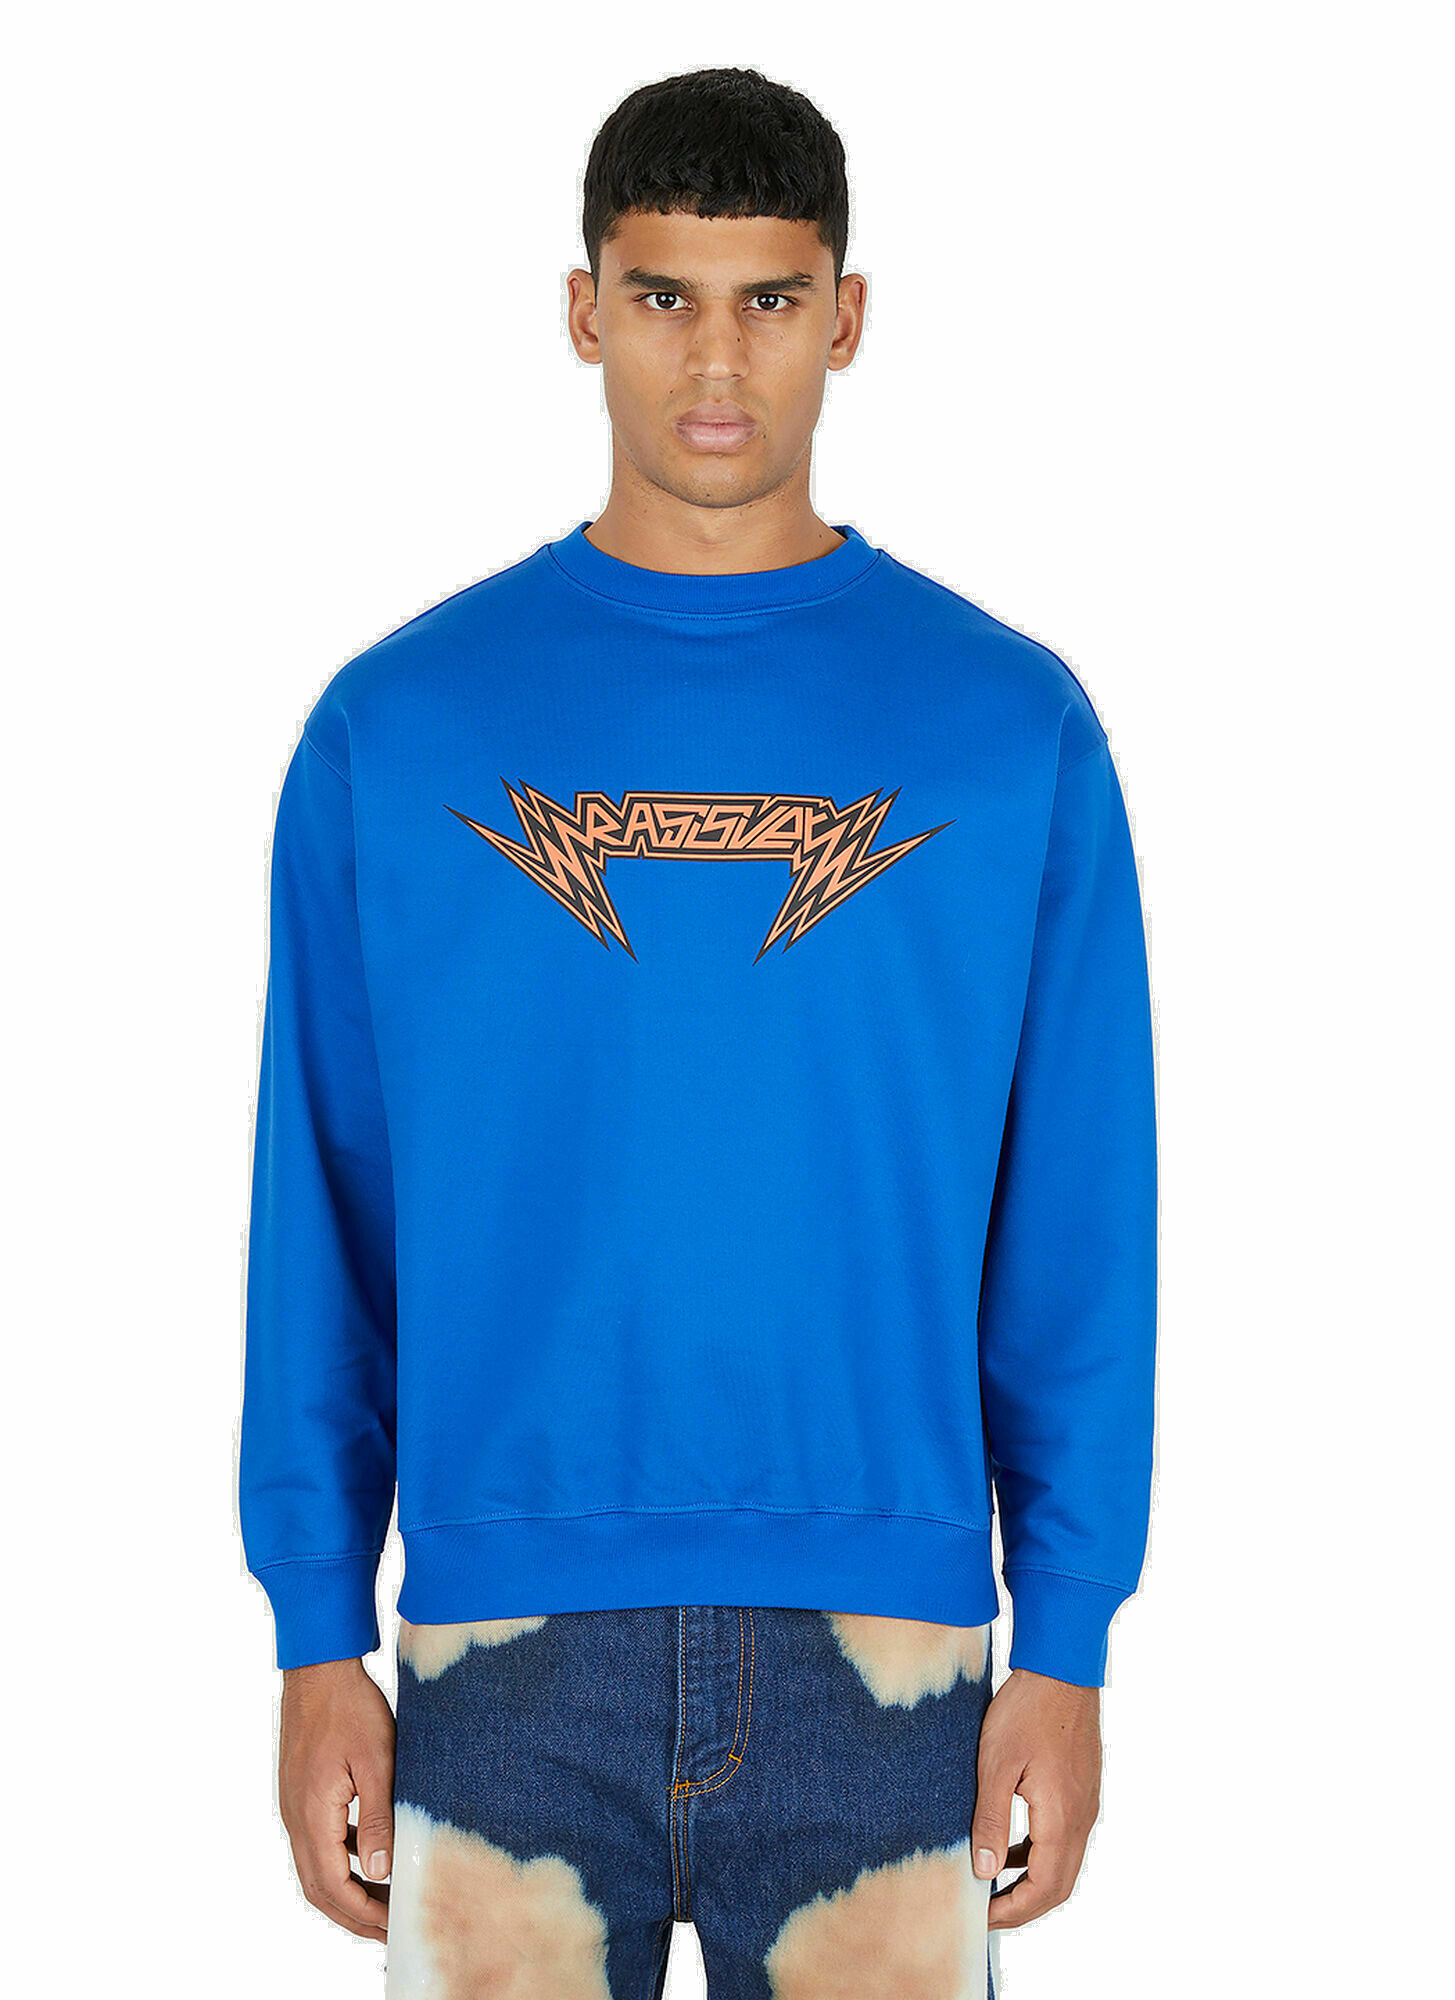 Sparks Sweatshirt in Blue Rassvet